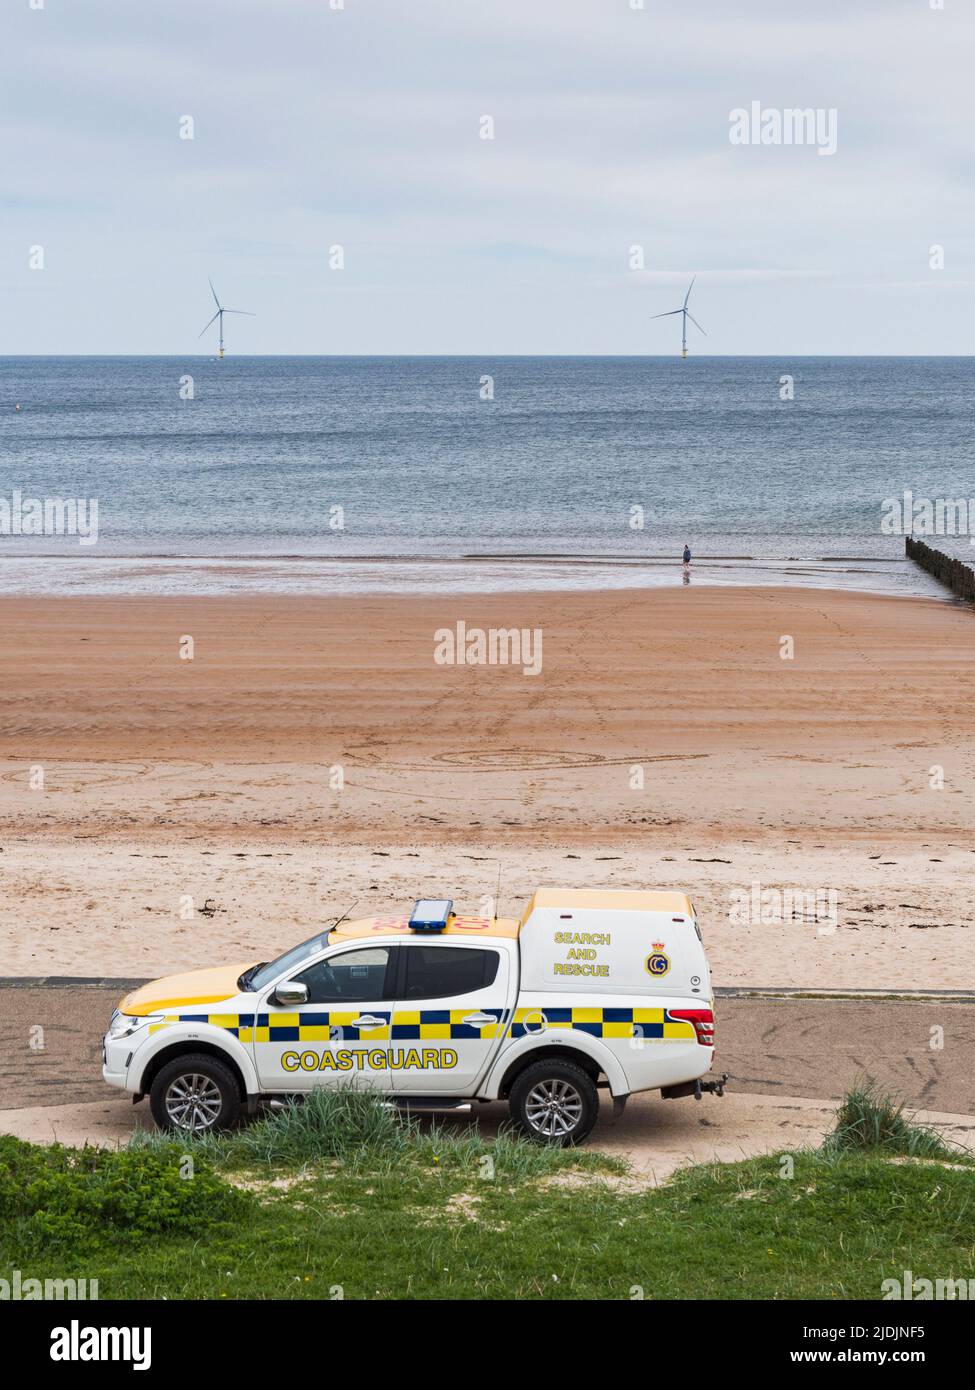 Coastguard vehicle parked at Blyth beach in Northumberland, UK Stock Photo